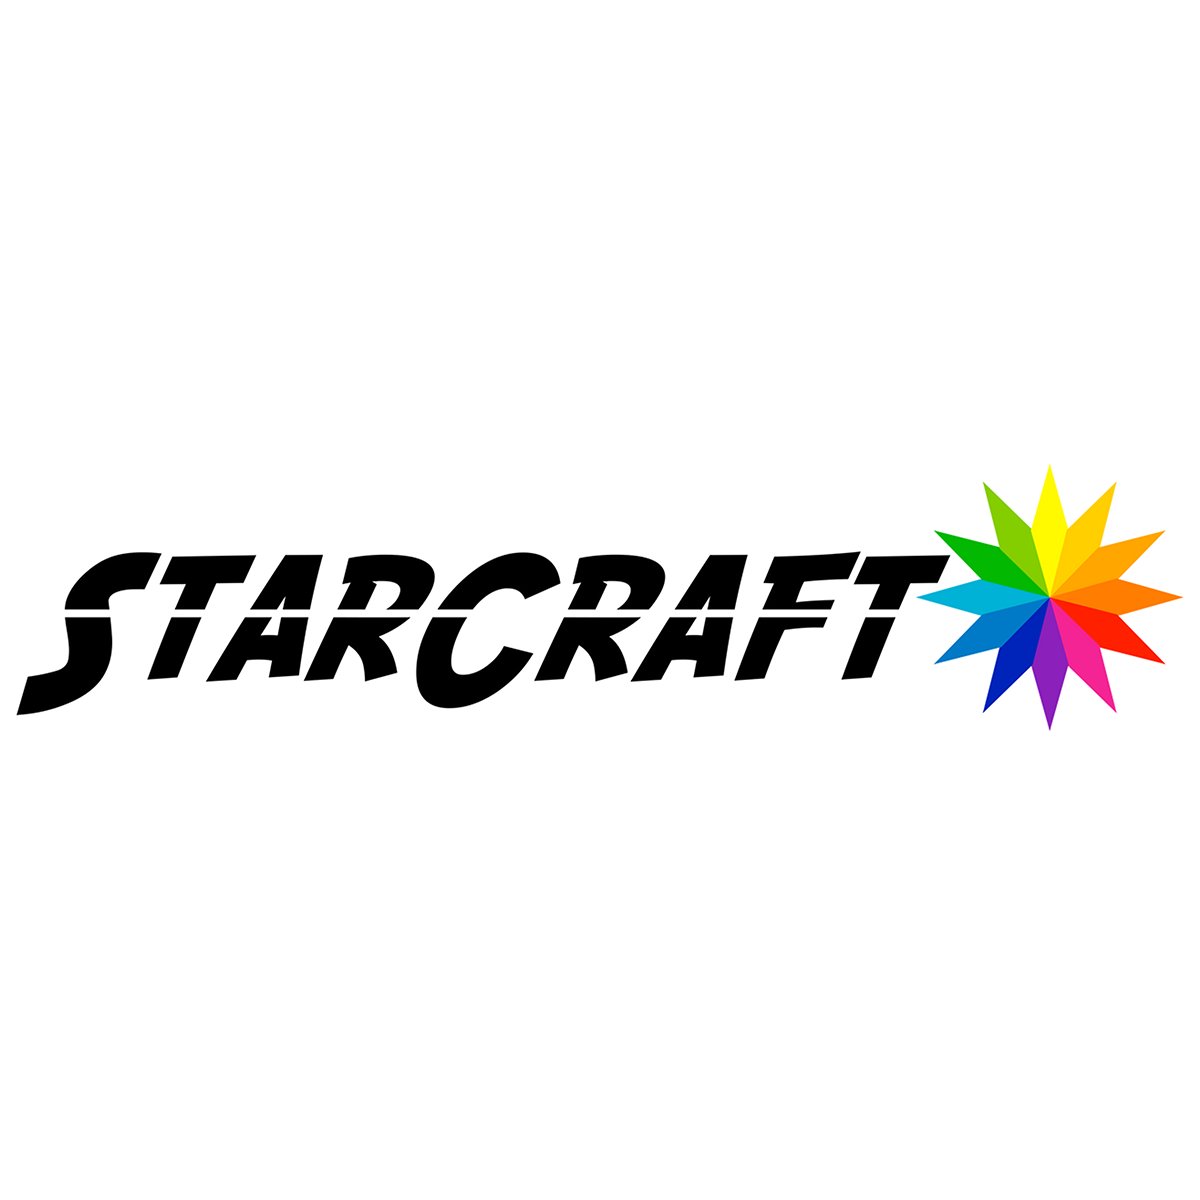 STARCRAFT